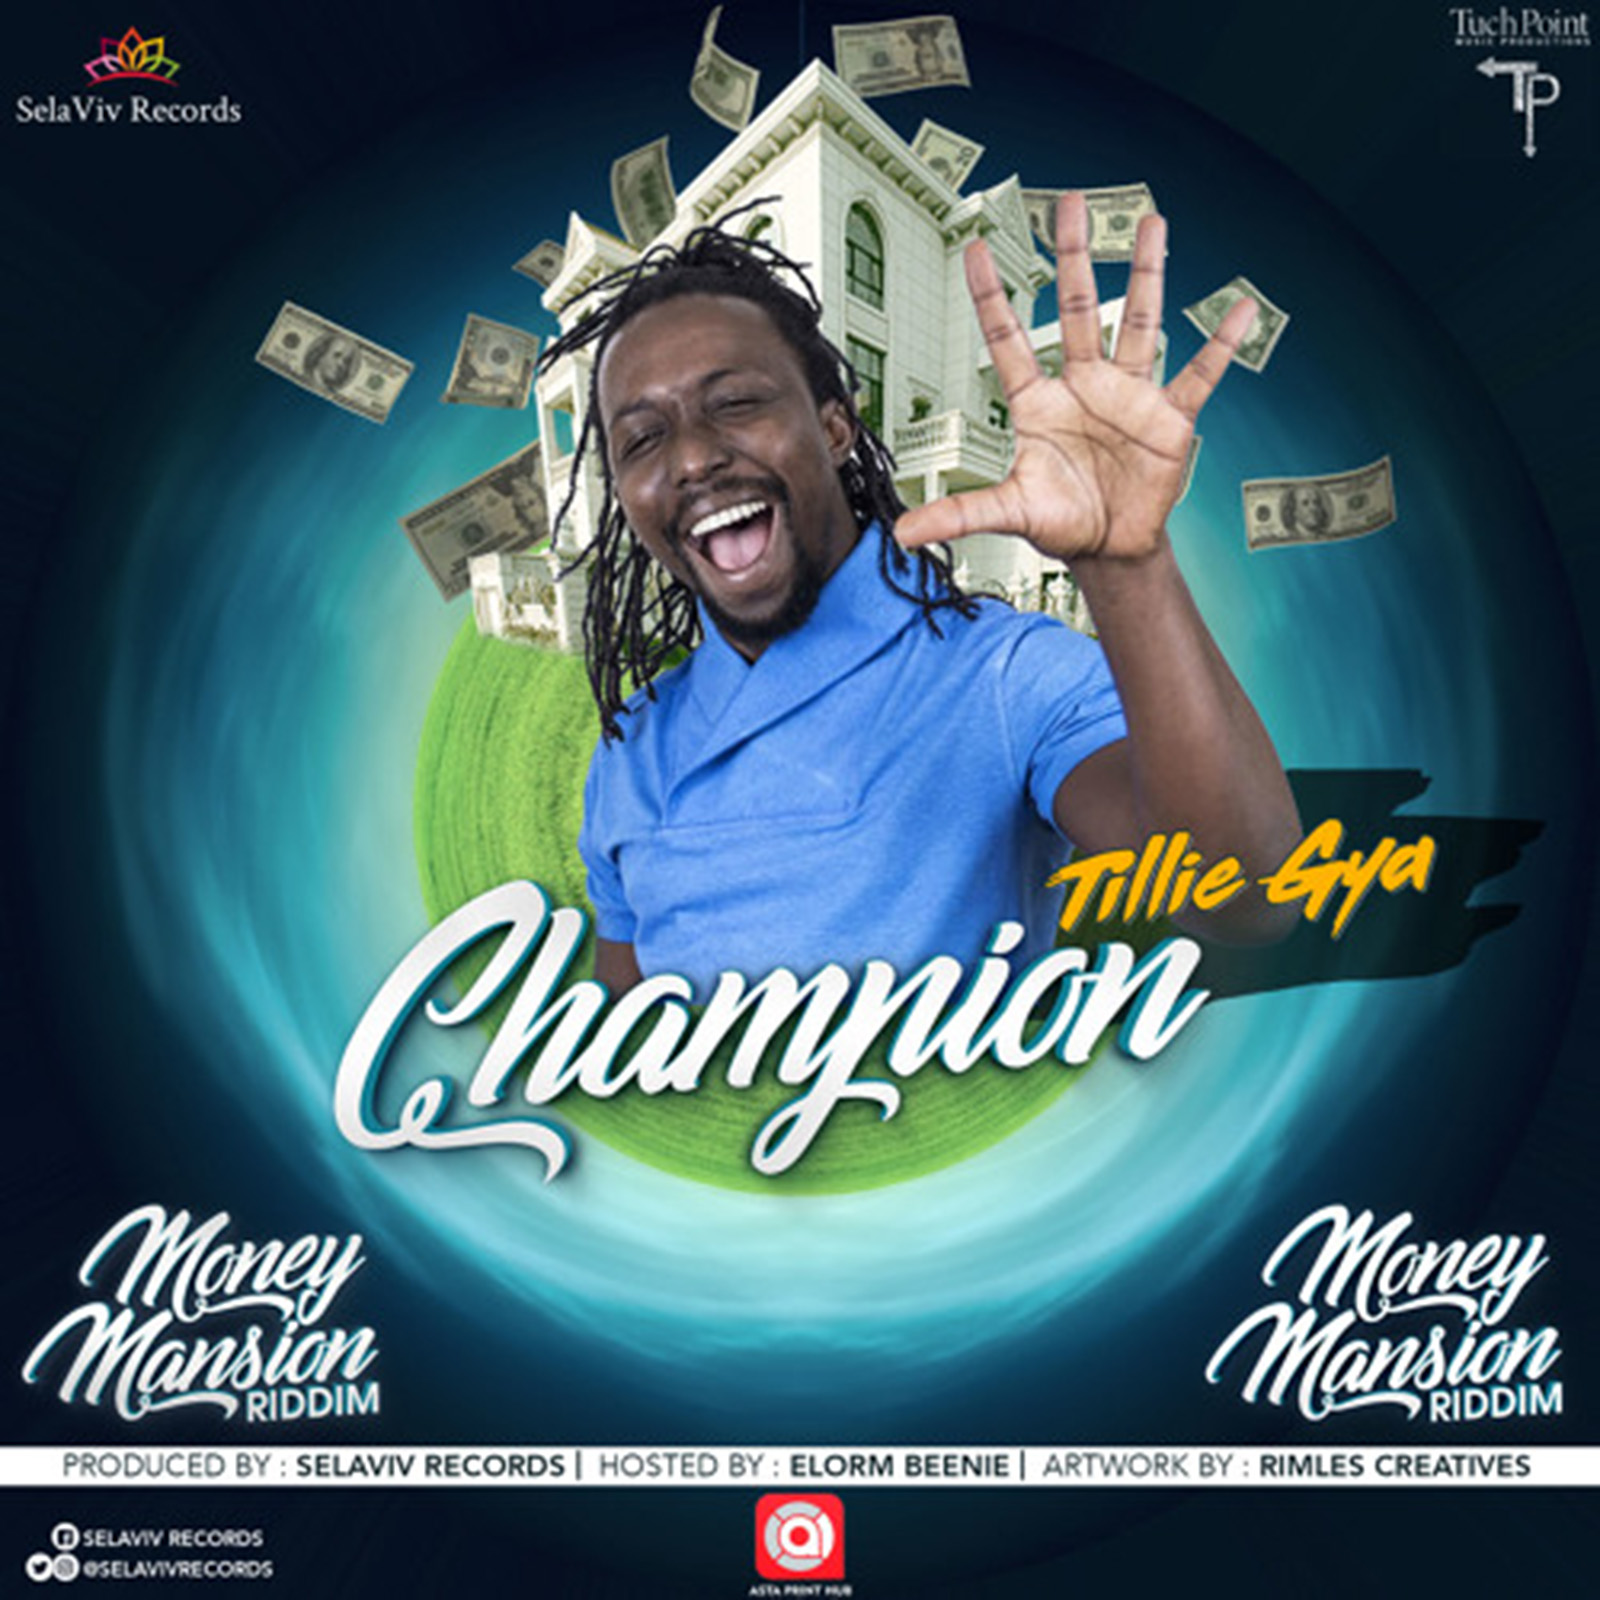 Champion (Money Mansion Riddim) by Tillie Gya